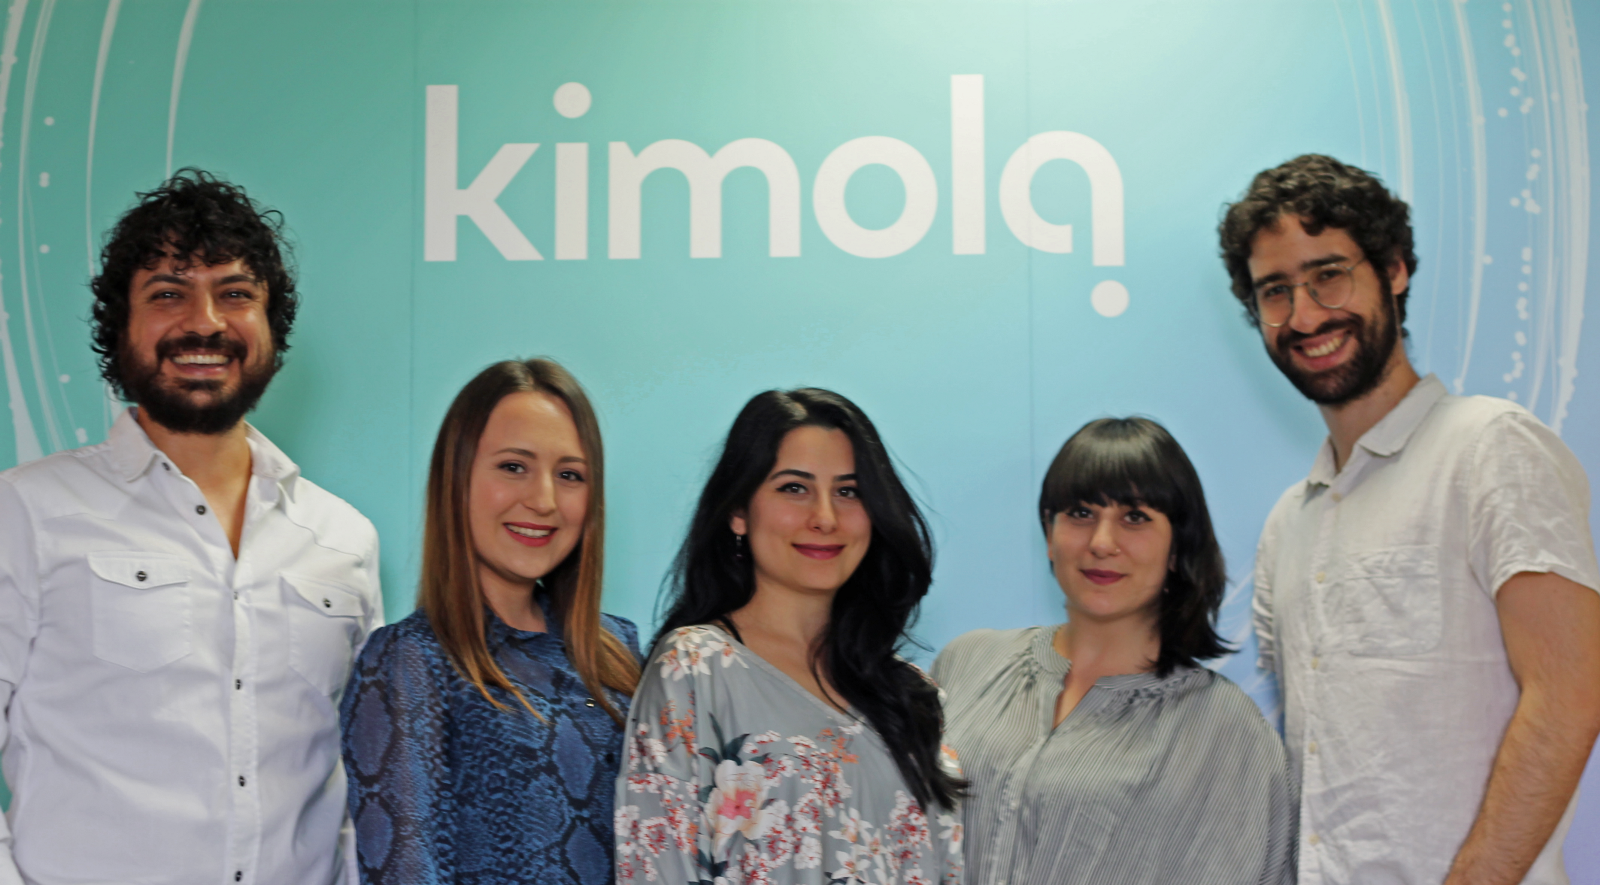 kimola consumer insights